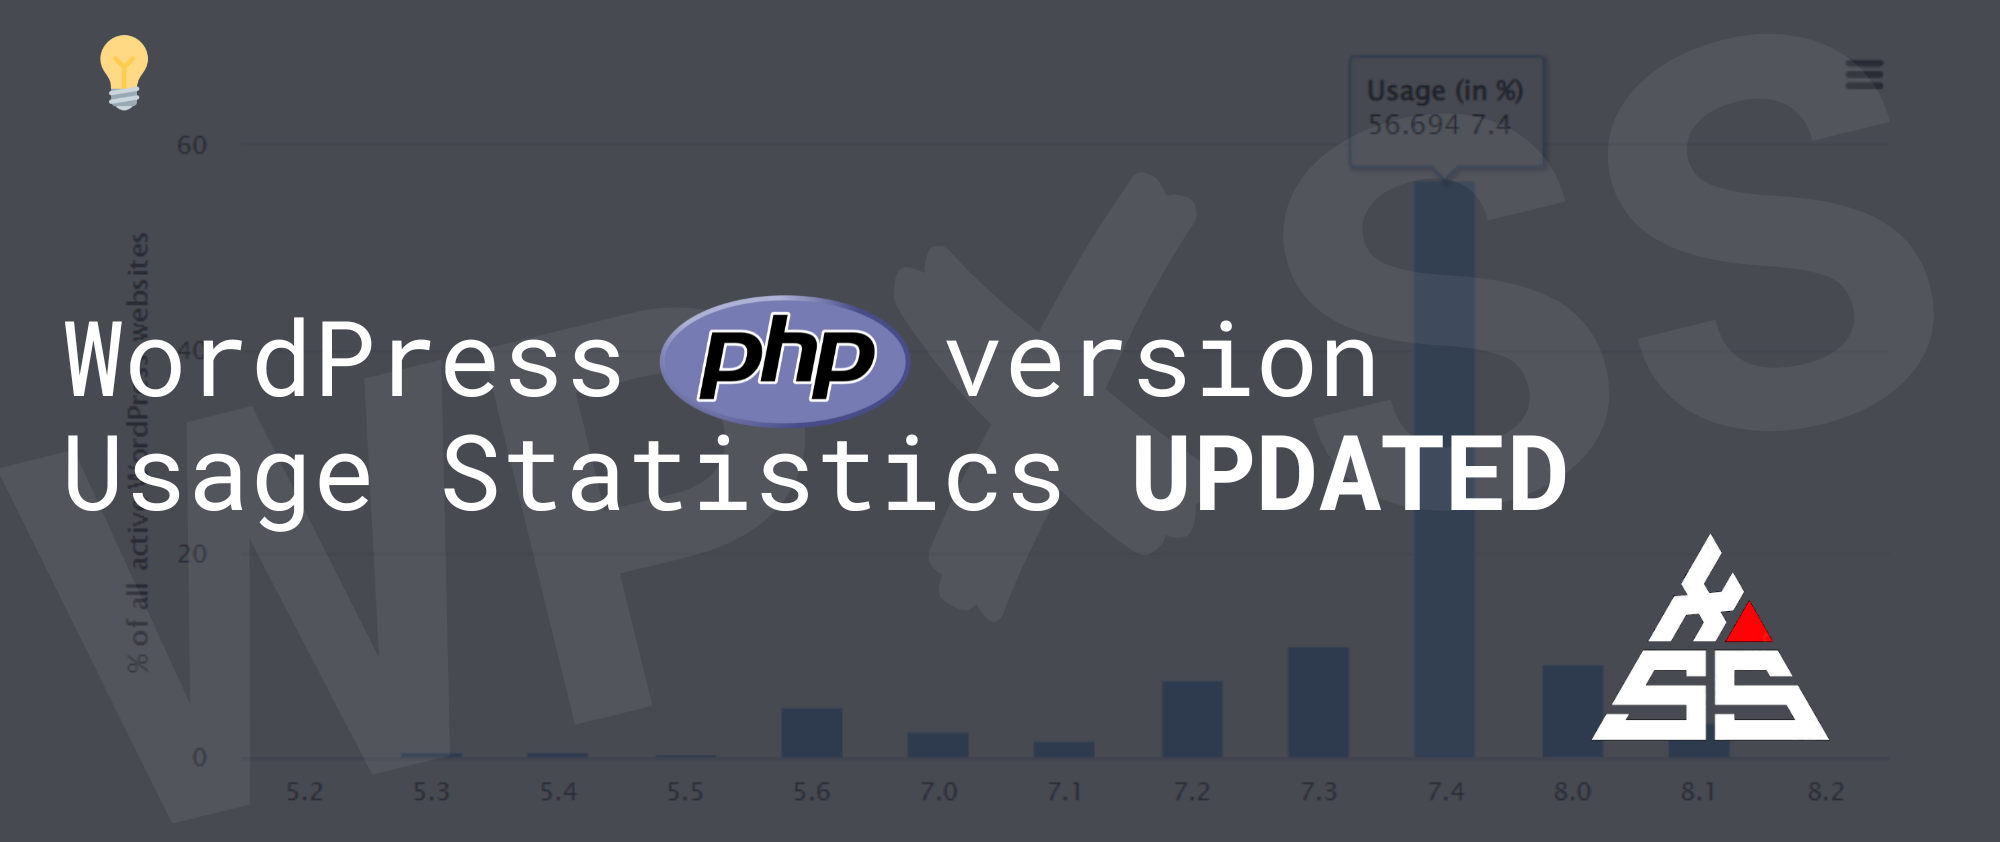 wordpress php usage statistics - WordPress PHP Version Usage Statistics UPDATED